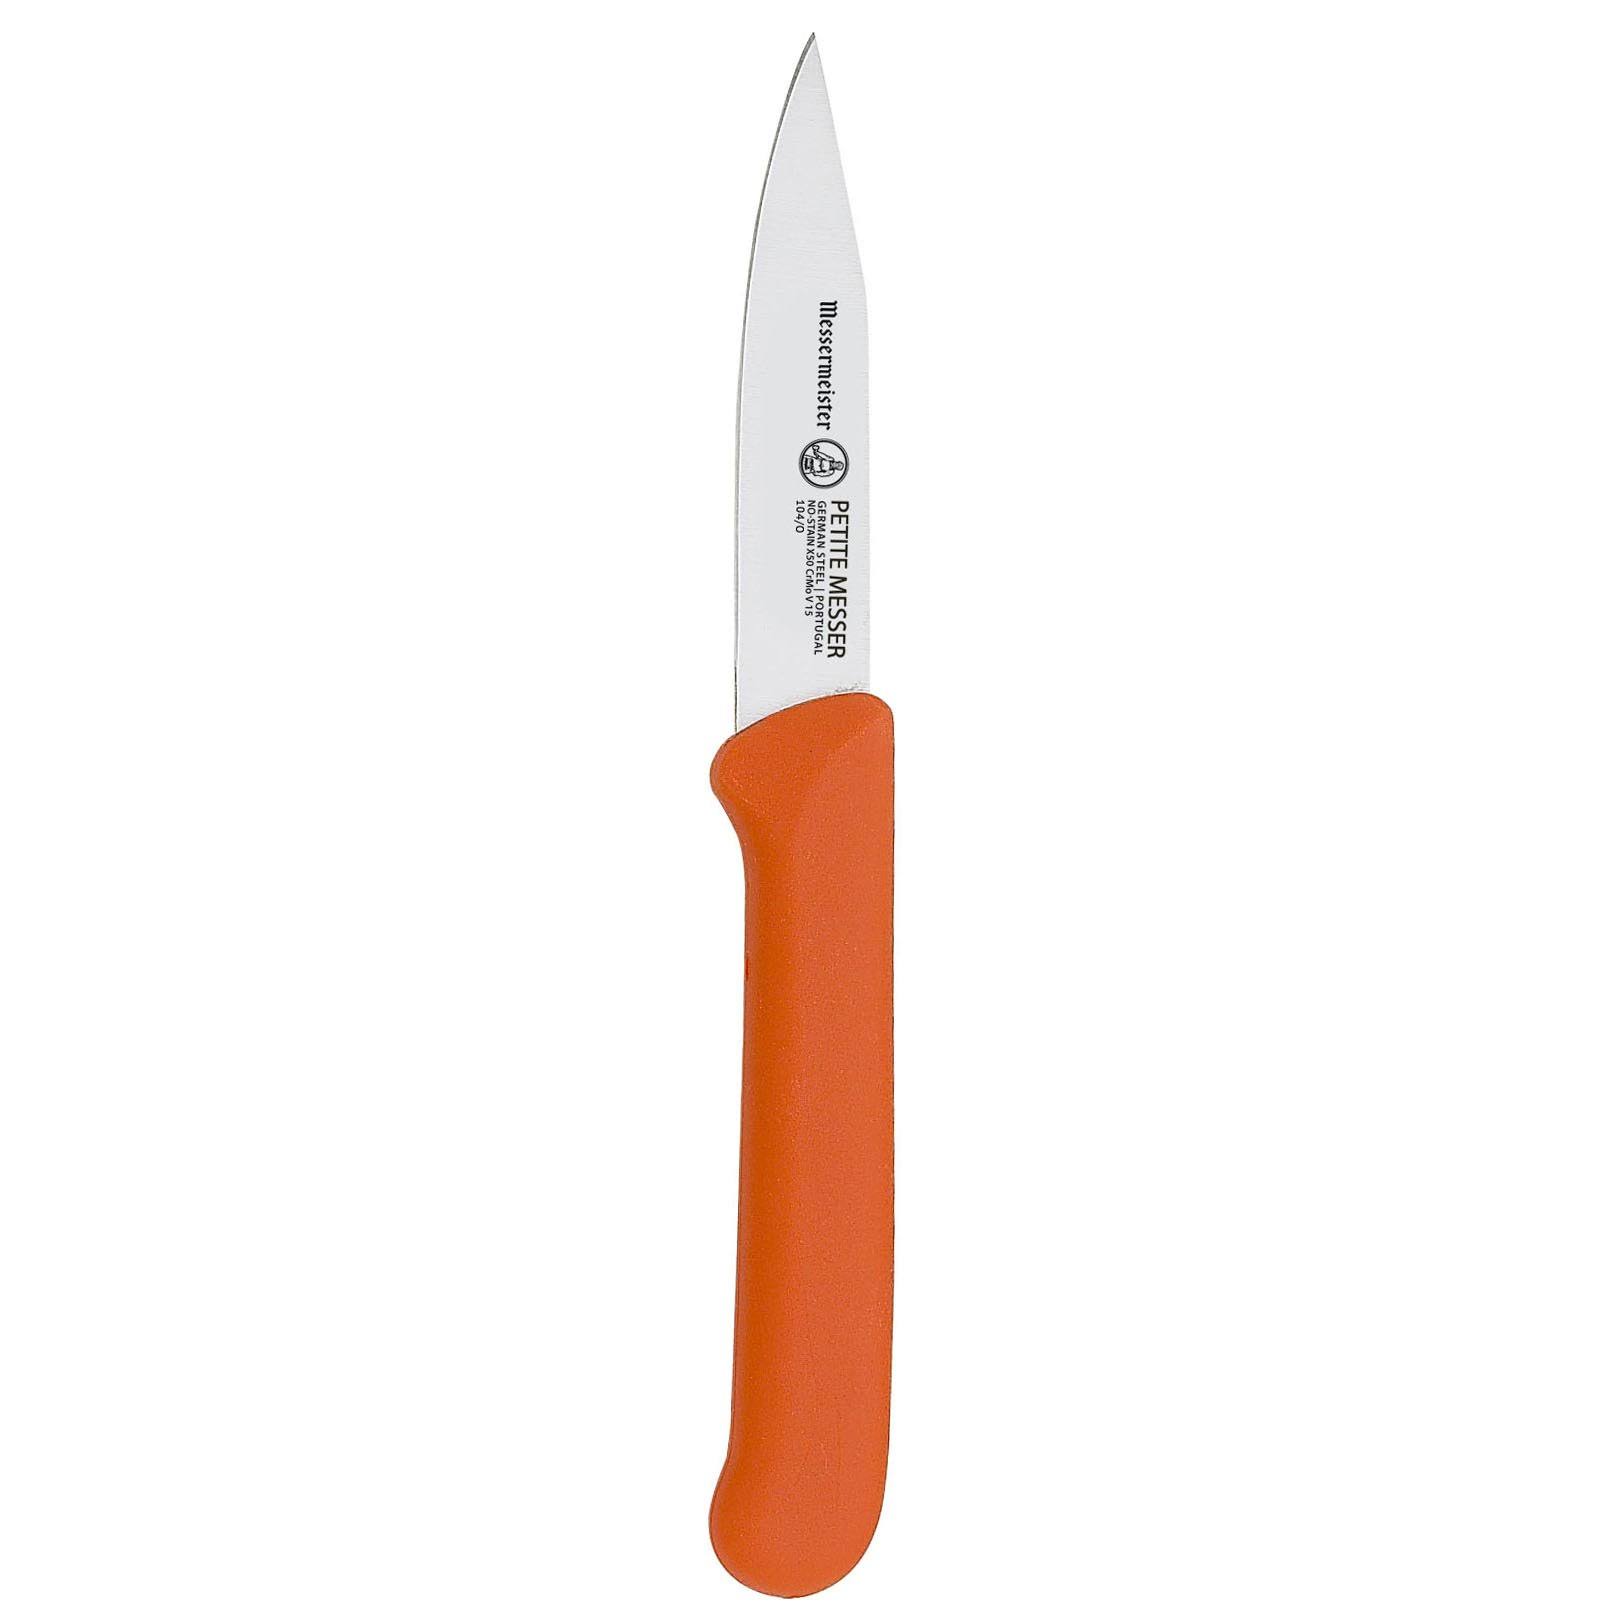 Messermeister Clip Point Parer with Matching Sheath - Orange, 7.6cm